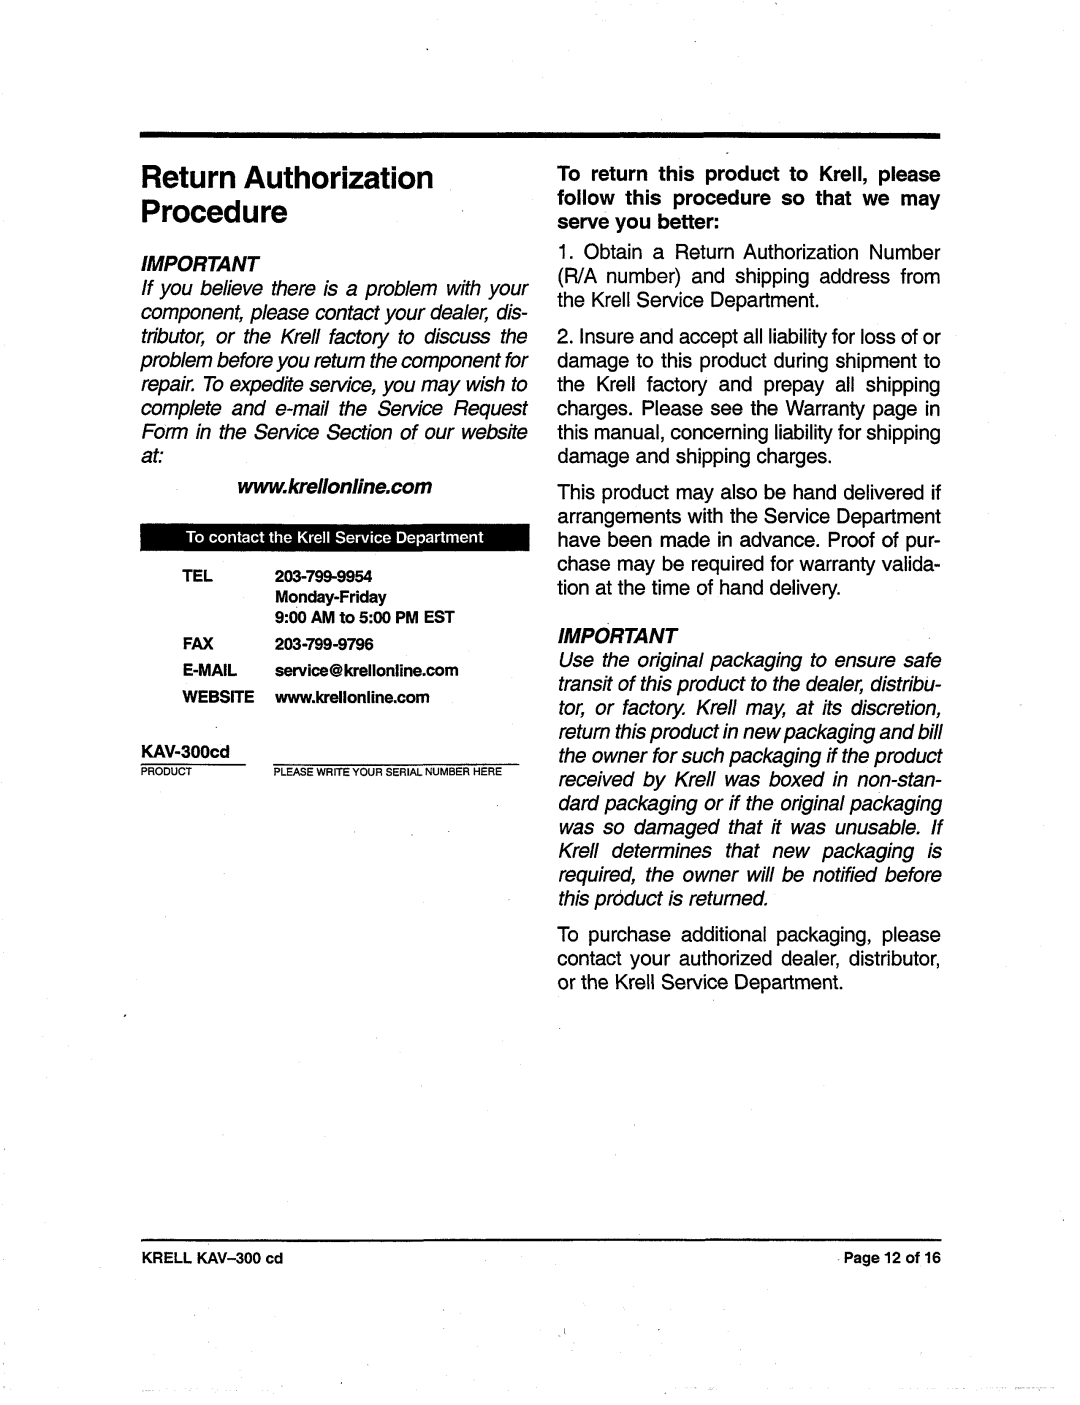 Krell Industries KAV-300cd manual ReturnAuthorization Procedure 